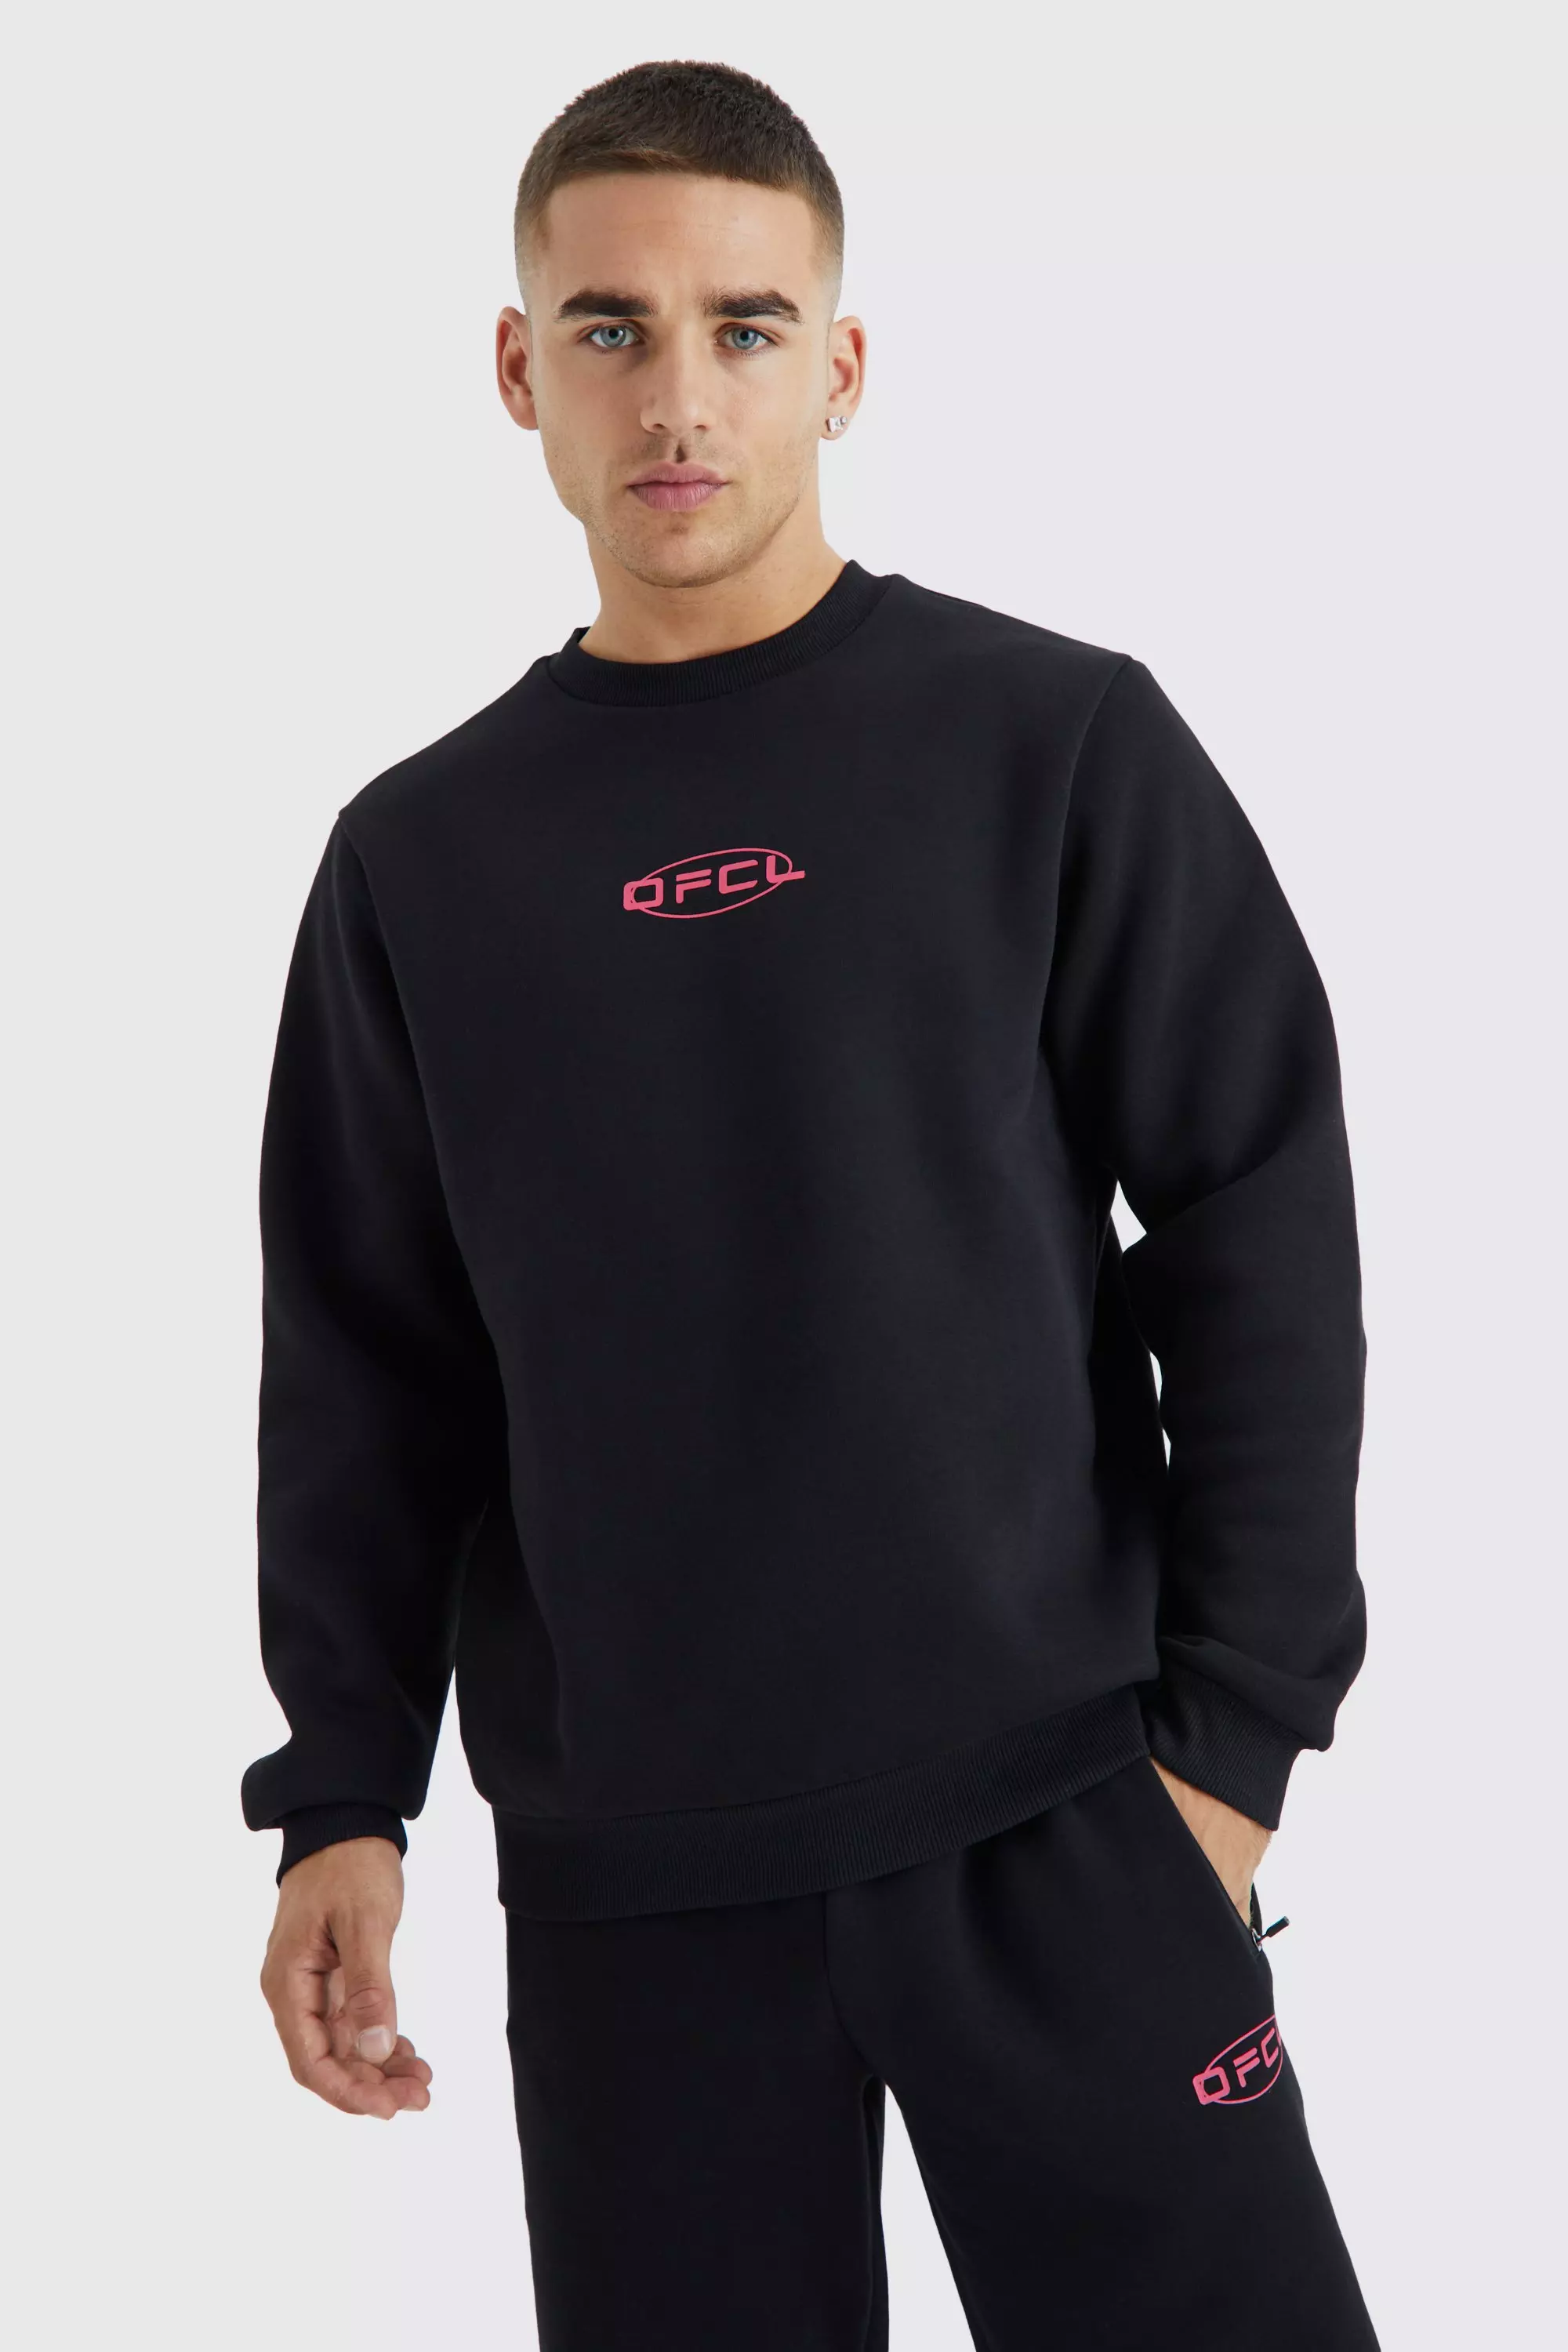 Basic Ofcl Crew Neck Sweatshirt Black